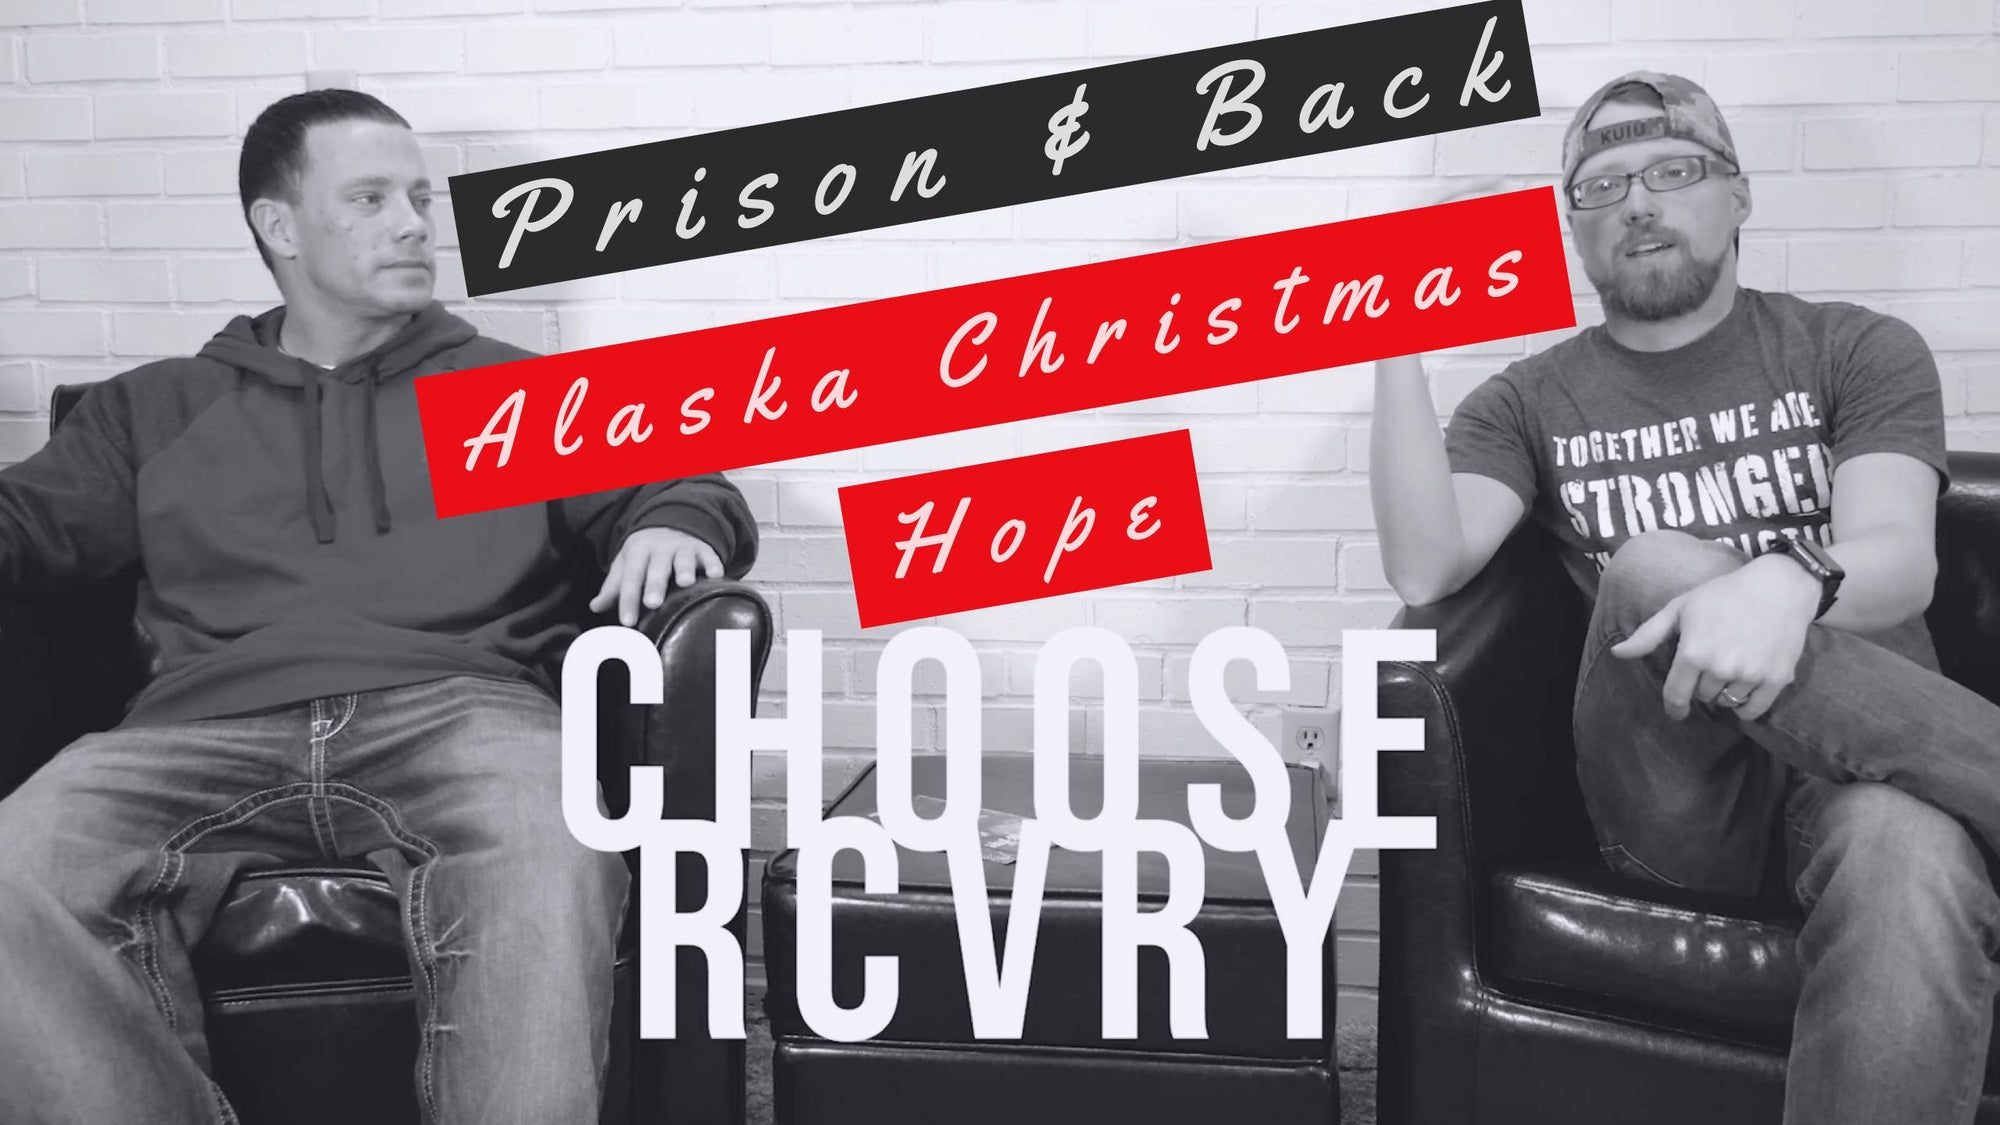 Prison and Back Alaska Christmas Hope | Choose RCVRY